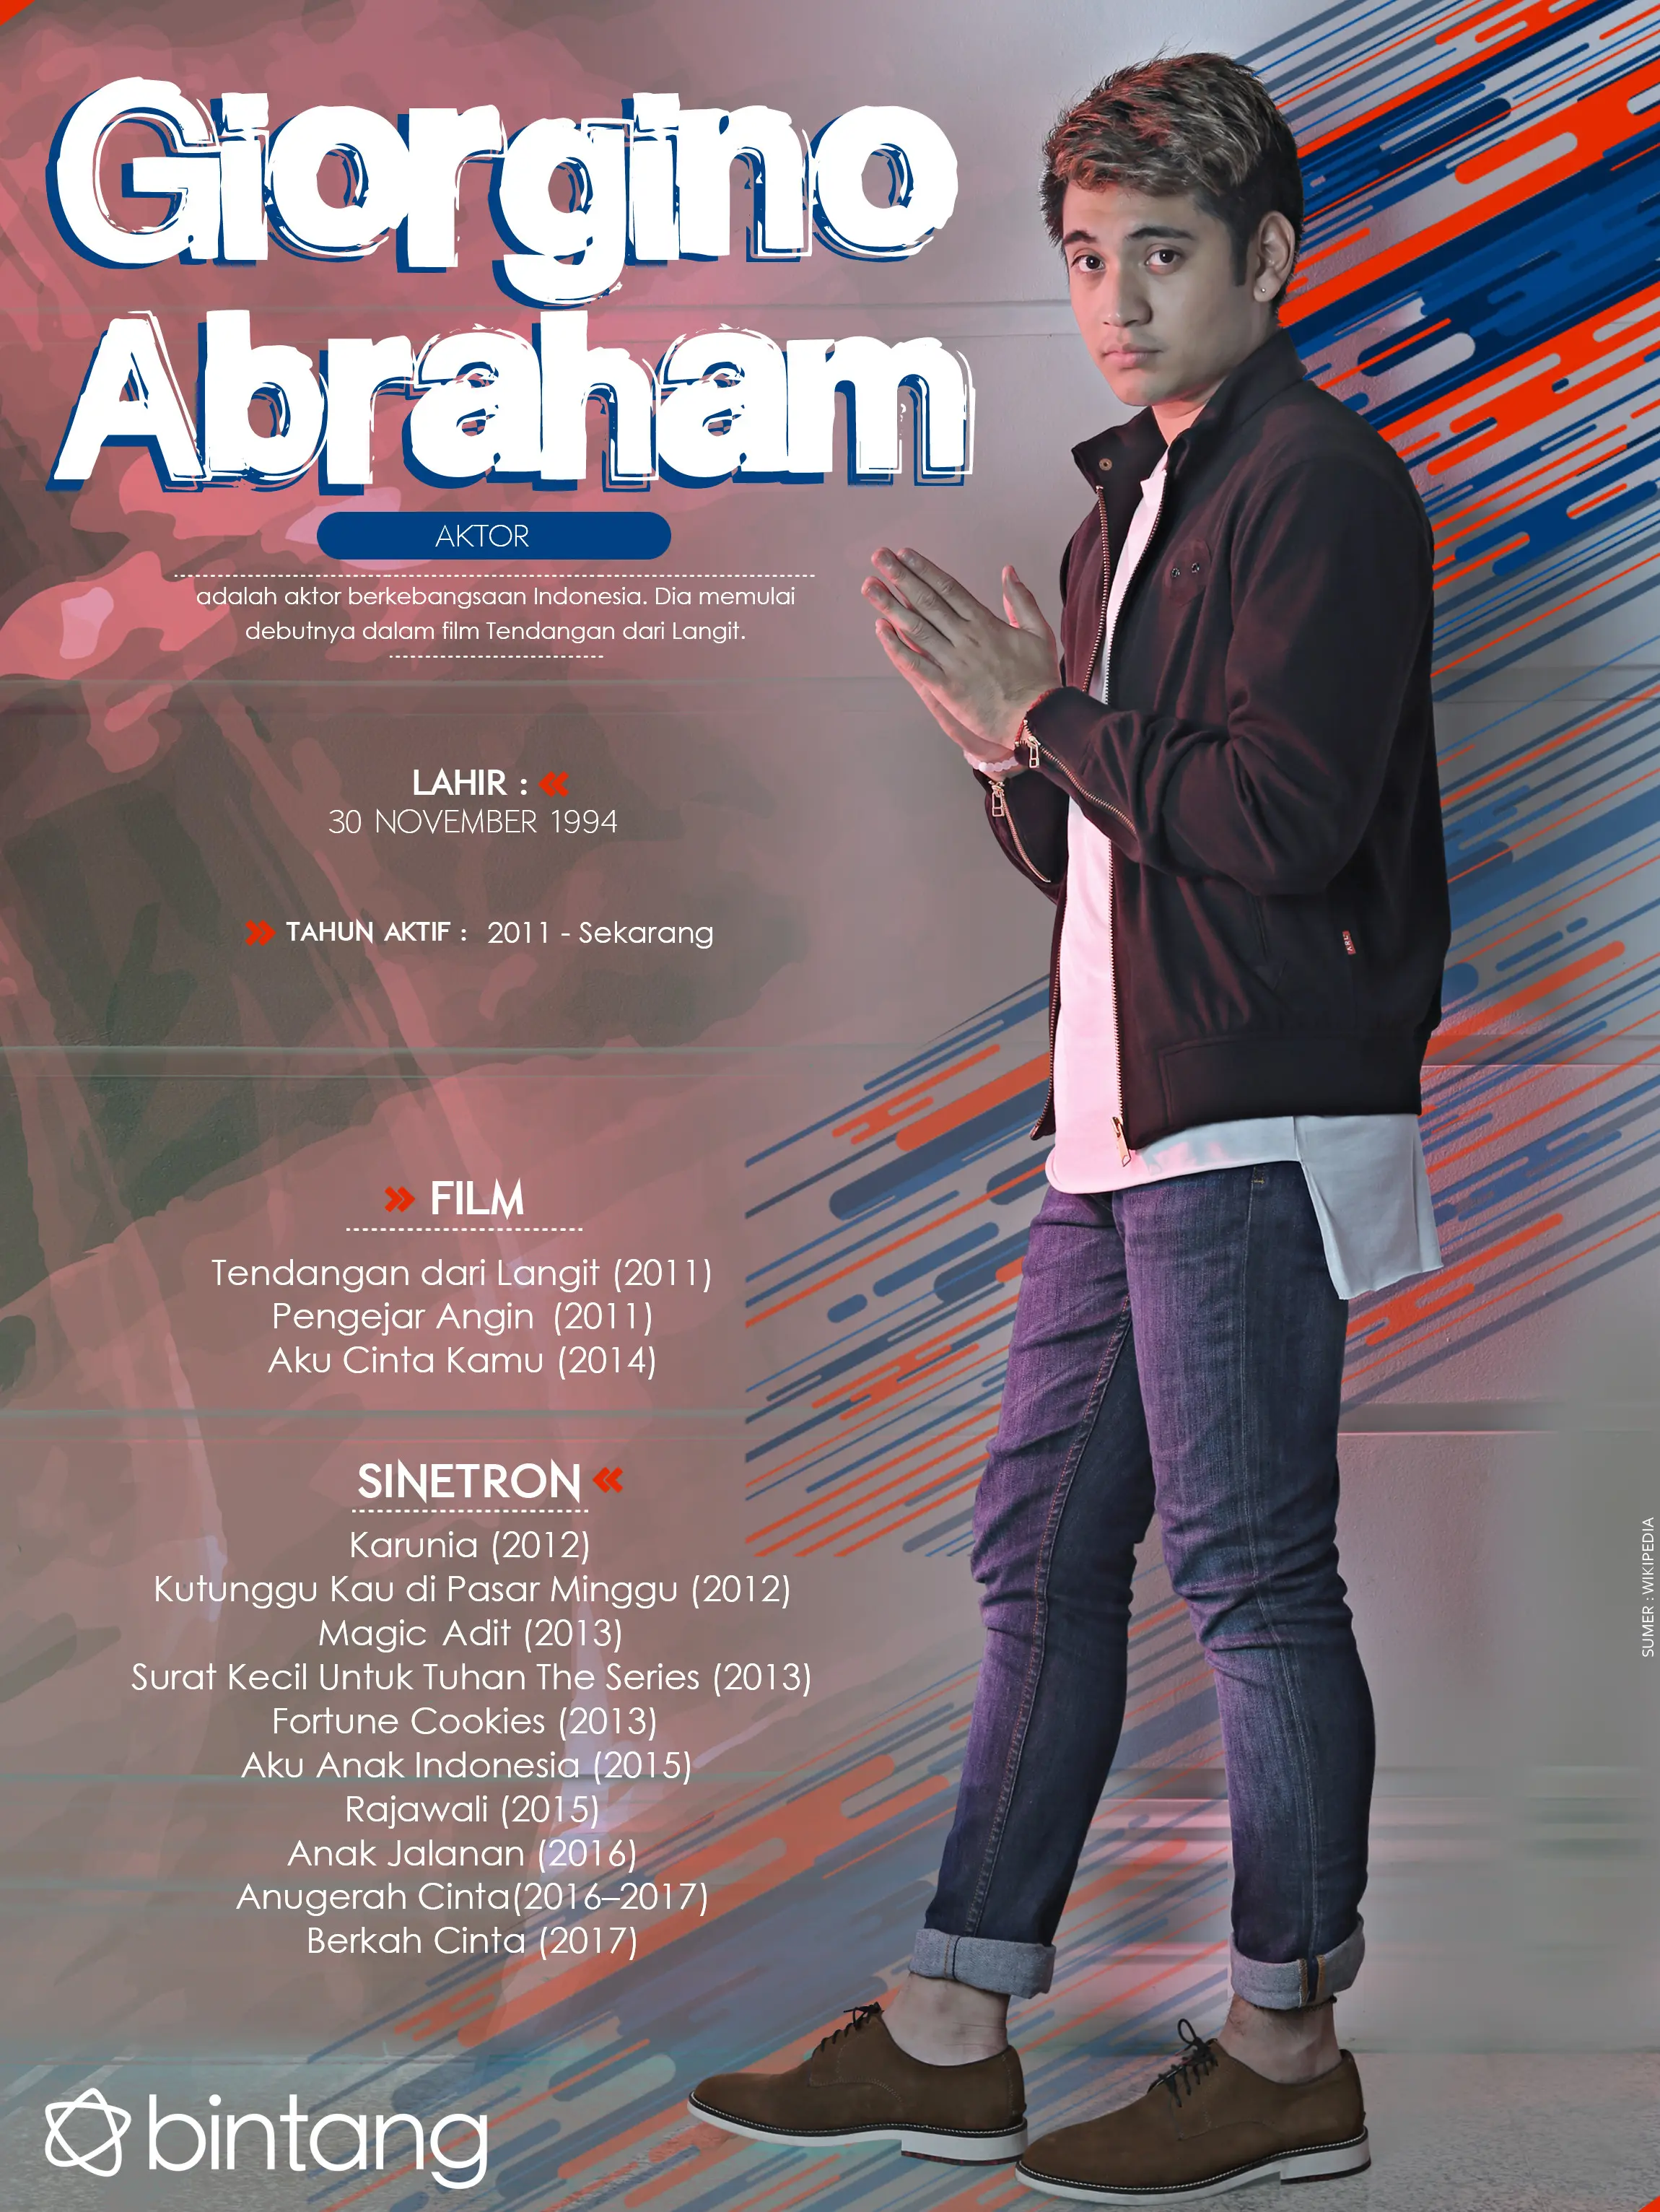 Celeb Bio Fatin Giorgino Abraham (Fotografer: Galih W. Satria, Wardrobe : @orangutanapparel, Desain: Nurman Abdul Hakim/Bintang.com)